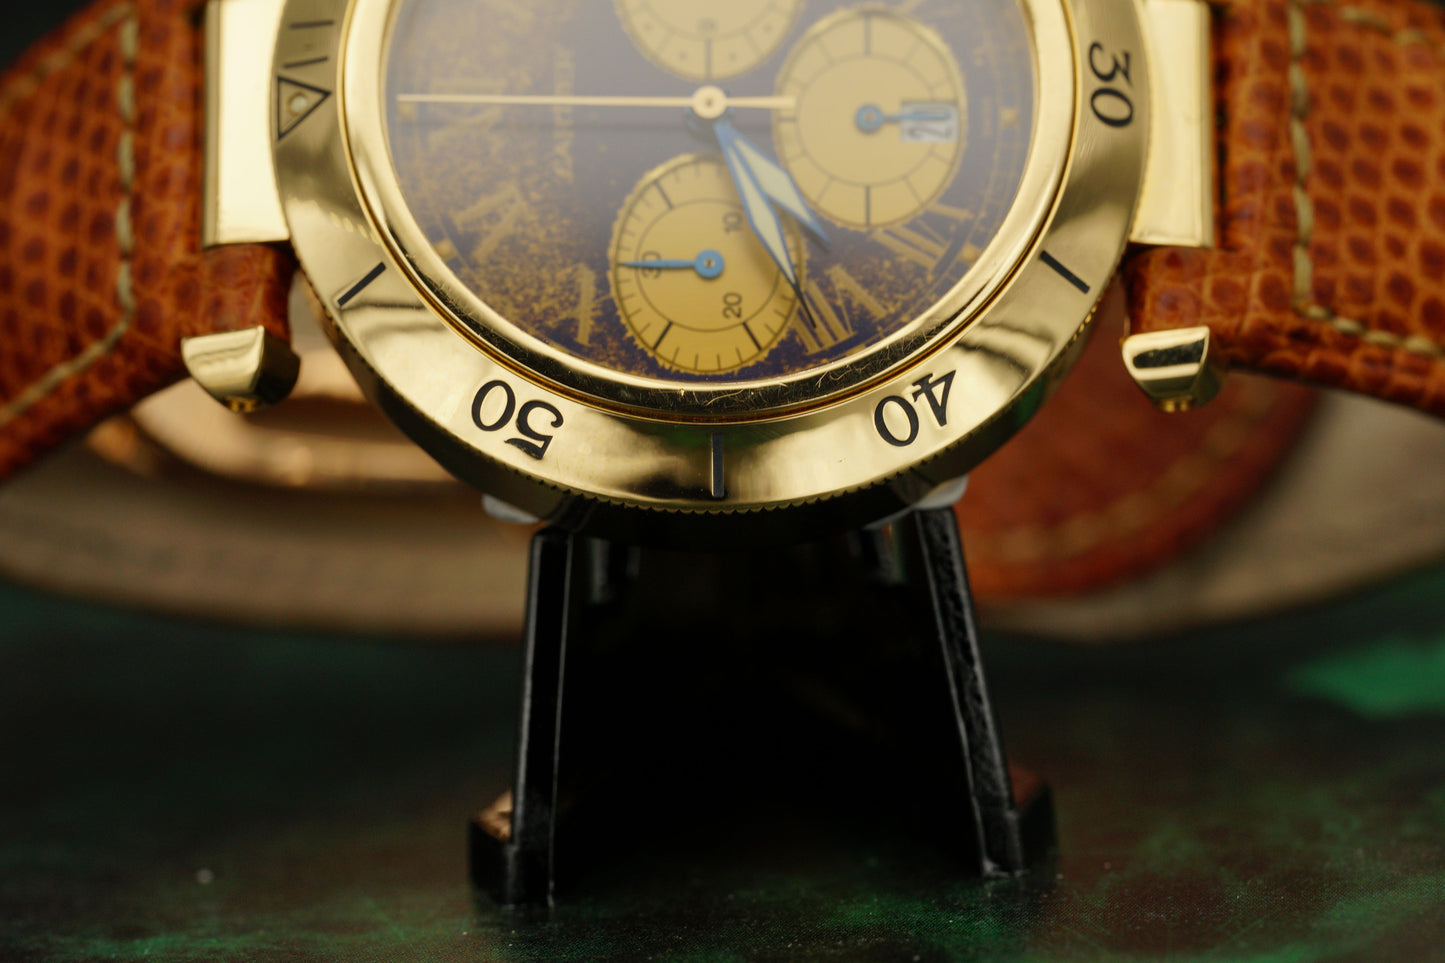 Cartier Pasha de Cartier | Chronograph | Ref. 30009 in 18k Yellowgold | Full Set 1993